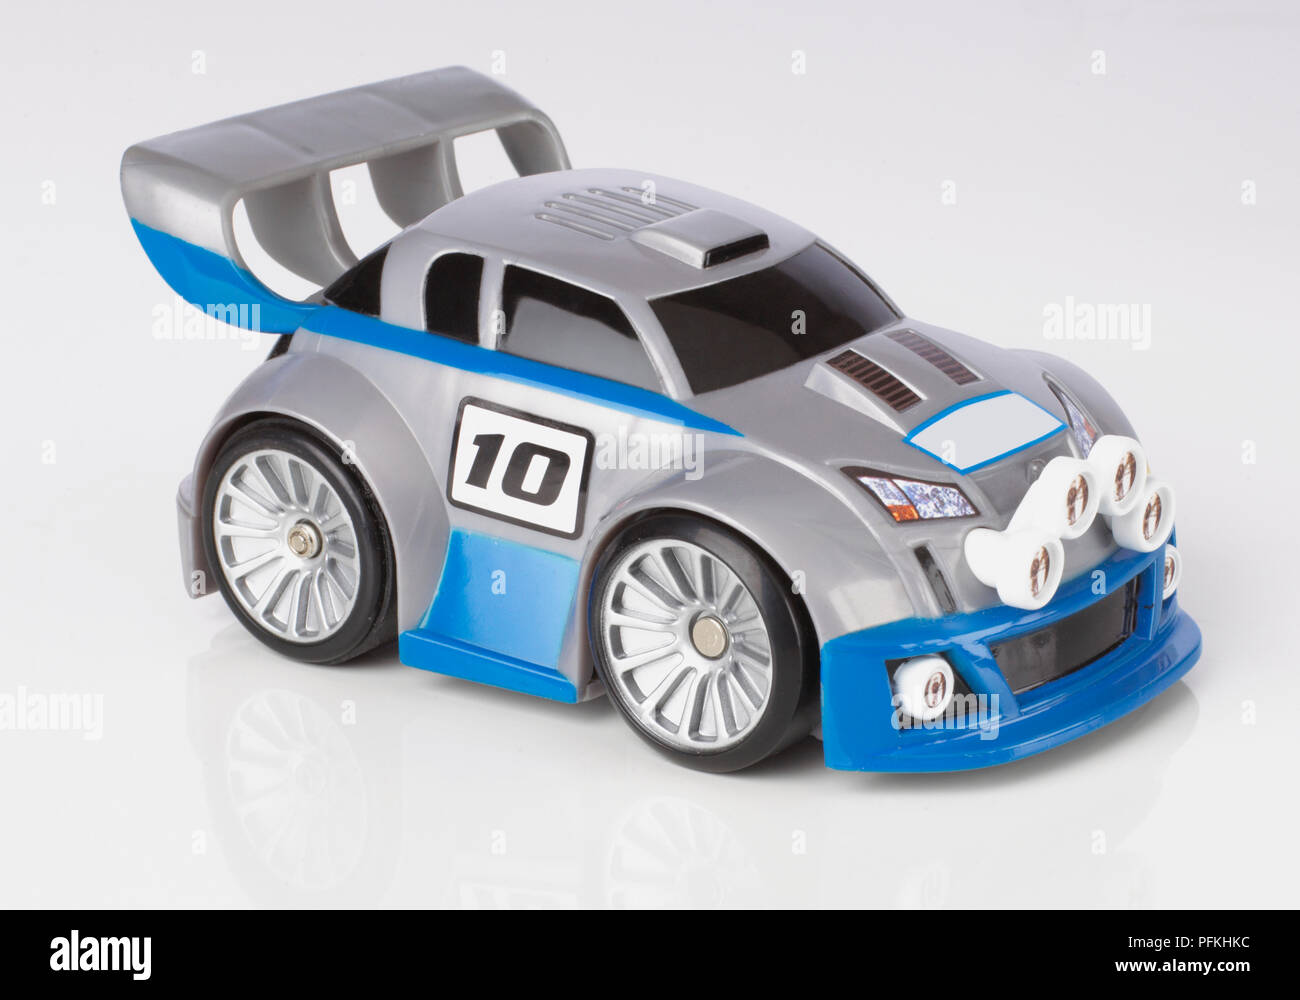 blue racing car toy